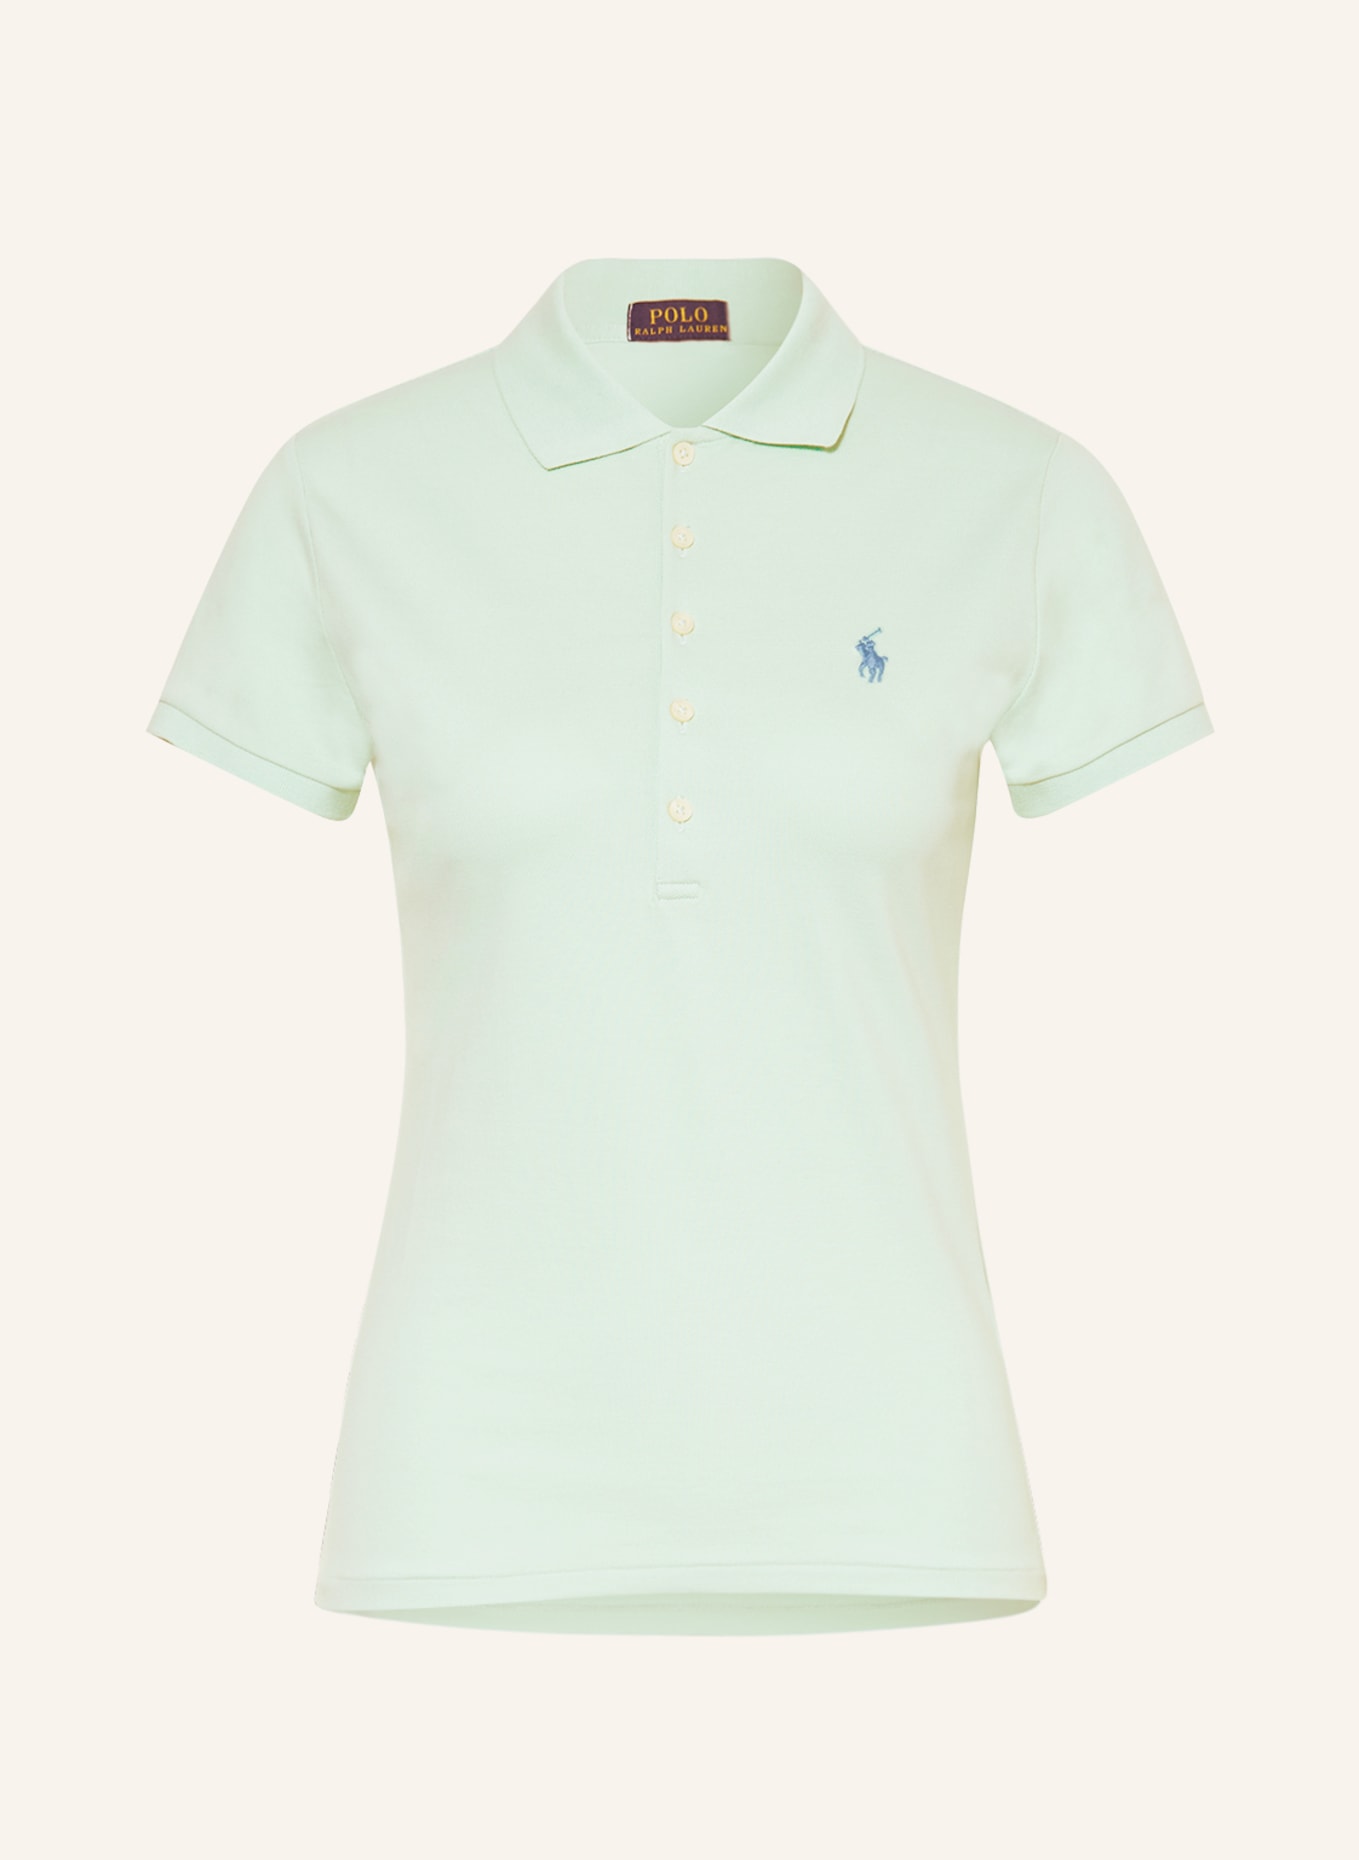 POLO RALPH LAUREN Piqué-Poloshirt, Farbe: MINT (Bild 1)